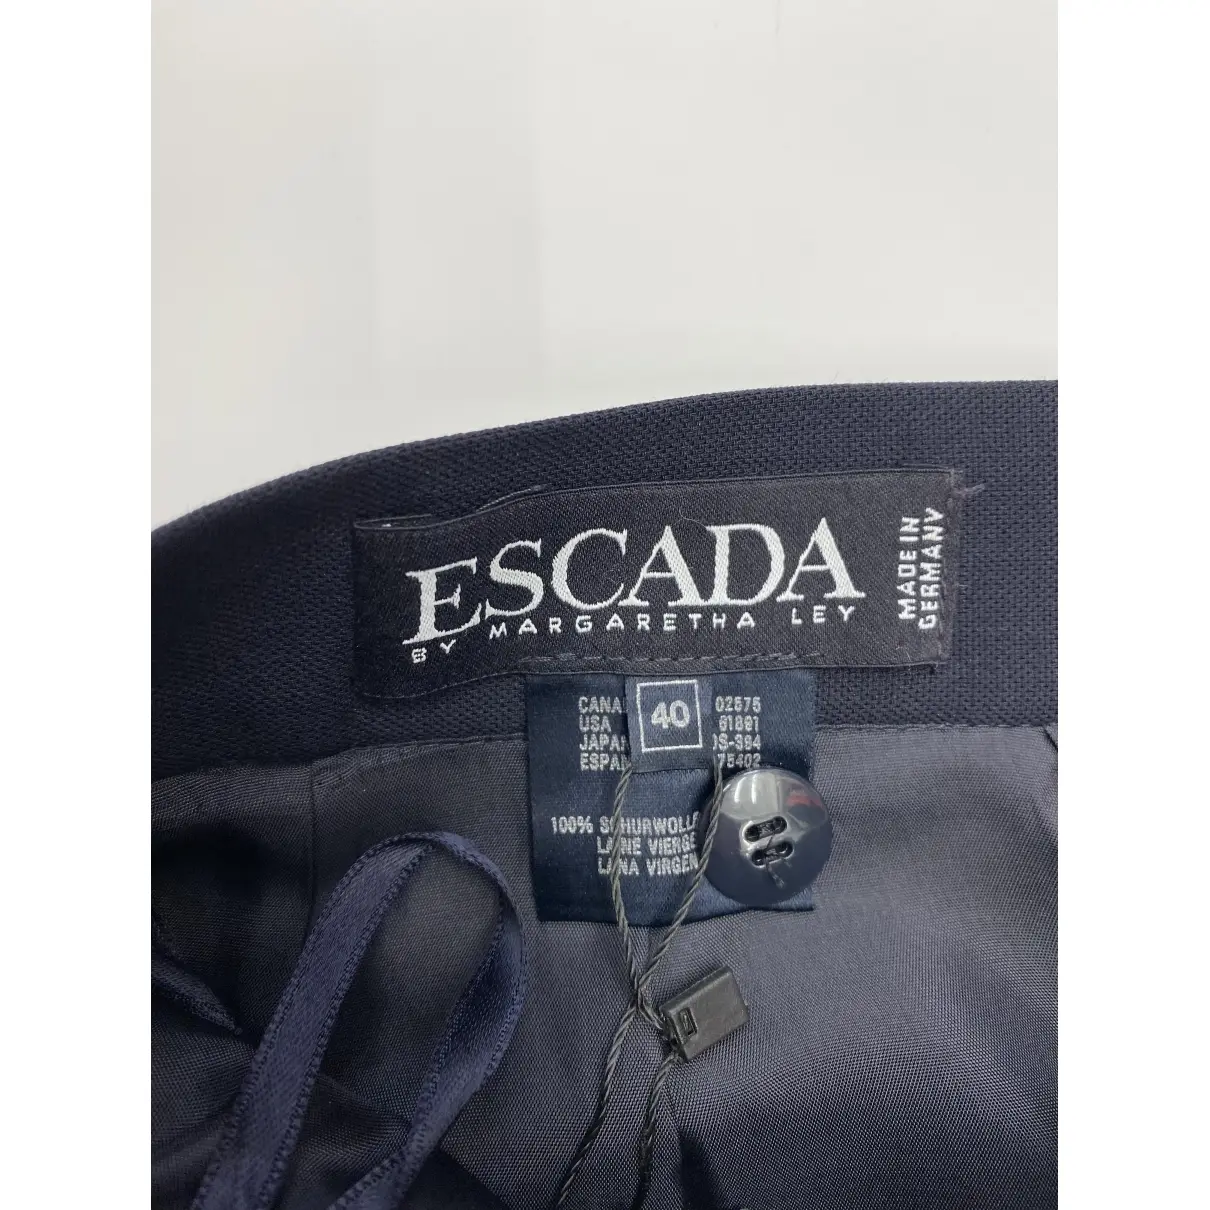 Buy Escada Wool mid-length skirt online